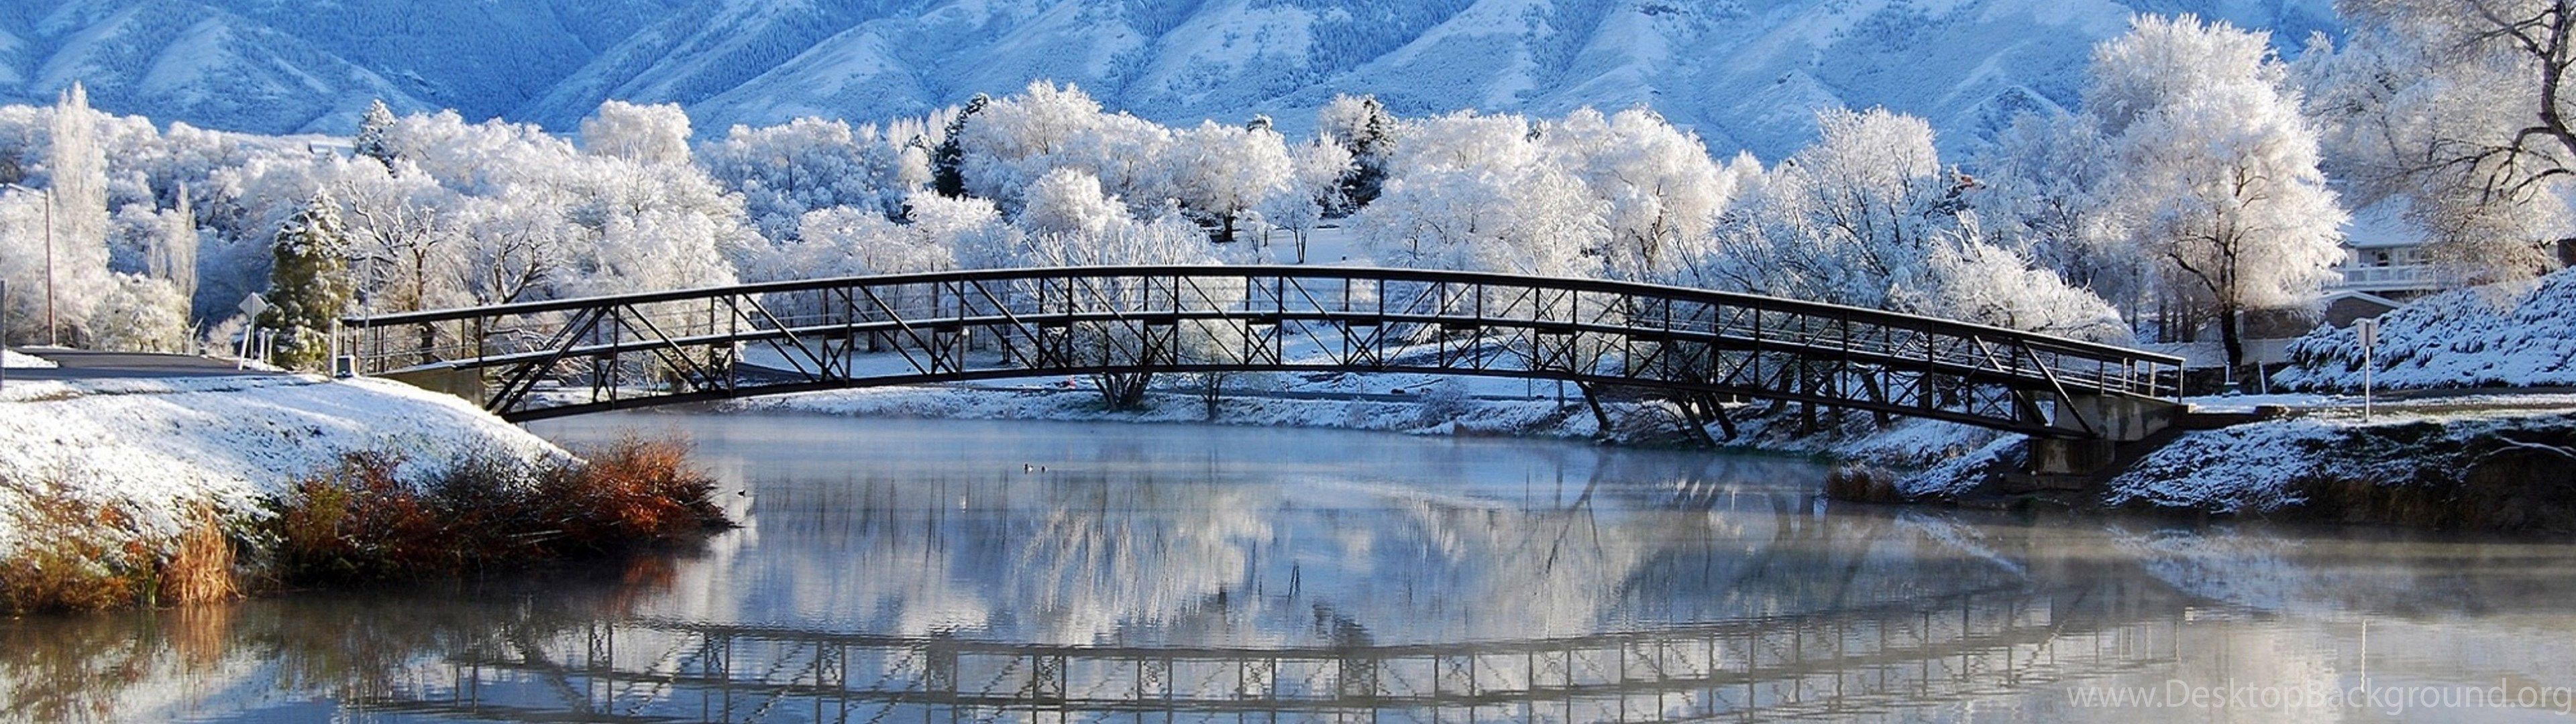 Frozen bridge over the lake HD winter wallpaper_ Desktop Background